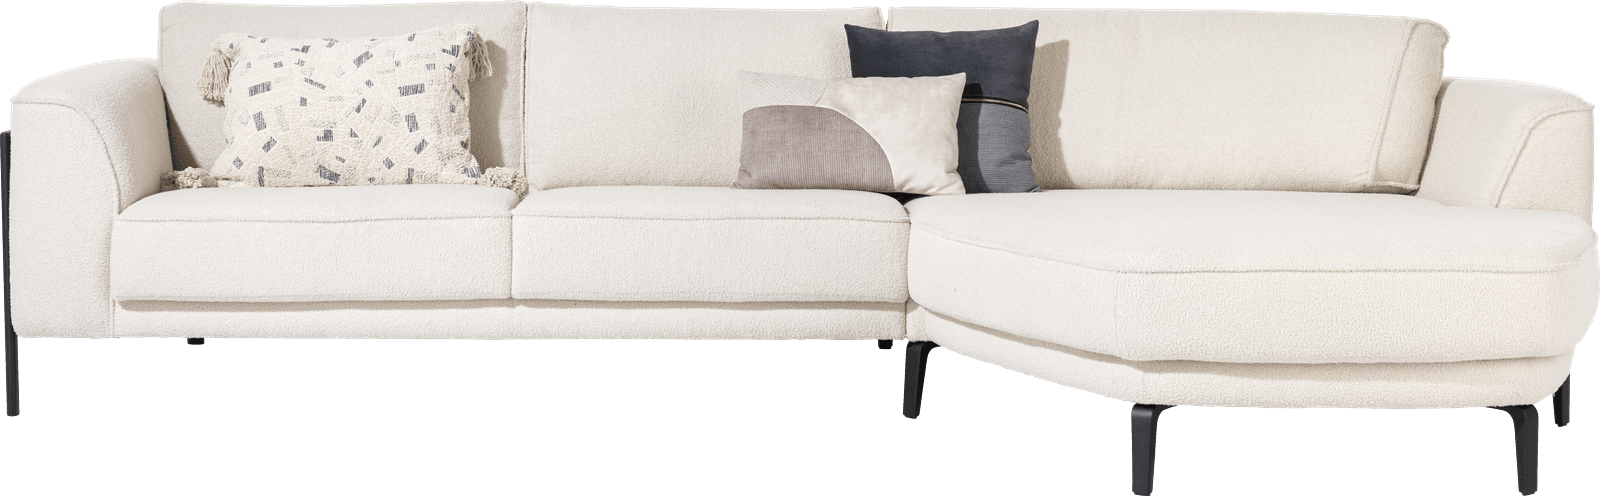 Henders & Hazel - Langley - Sofas - Longchair curved rechts - 2,5 Sitzer Armlehne links